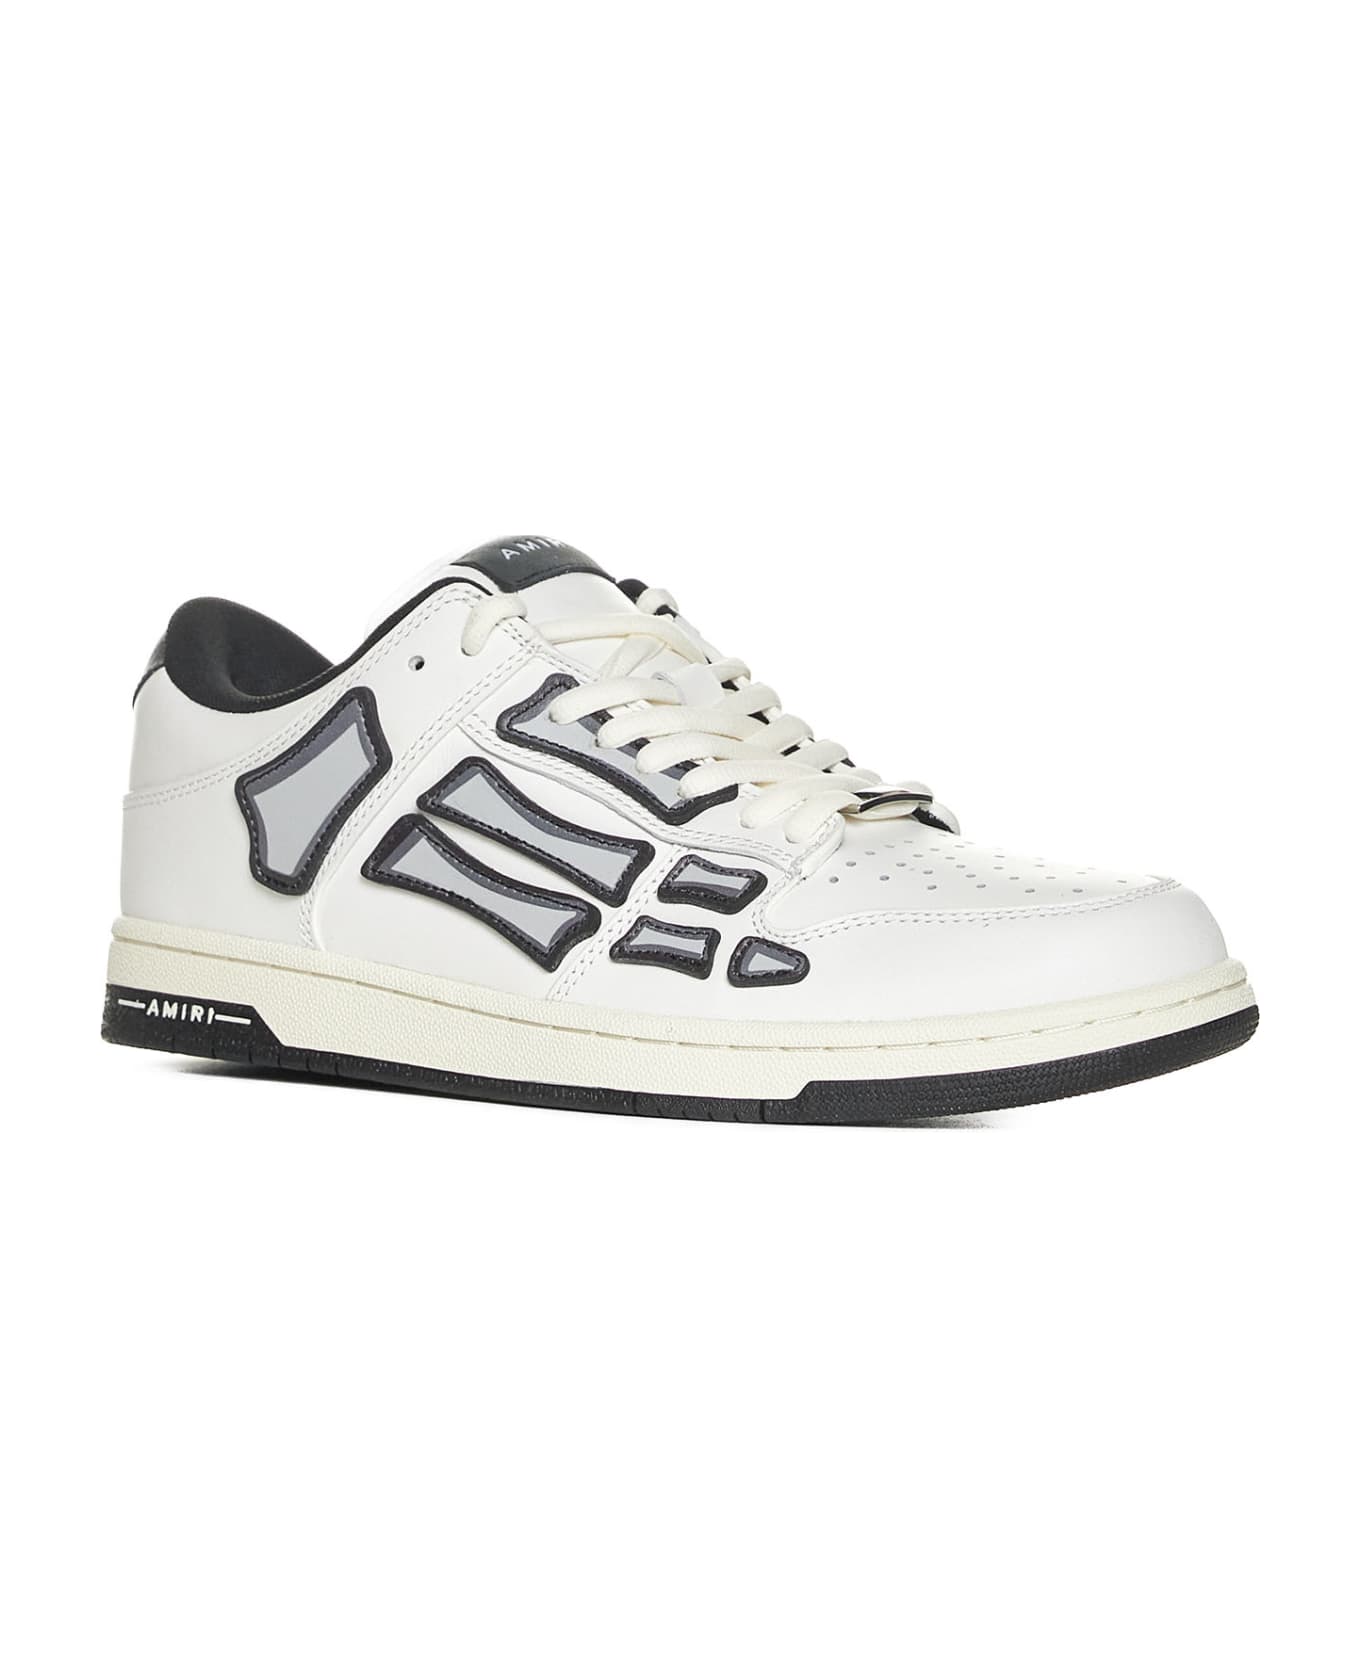 AMIRI Sneakers - White/black